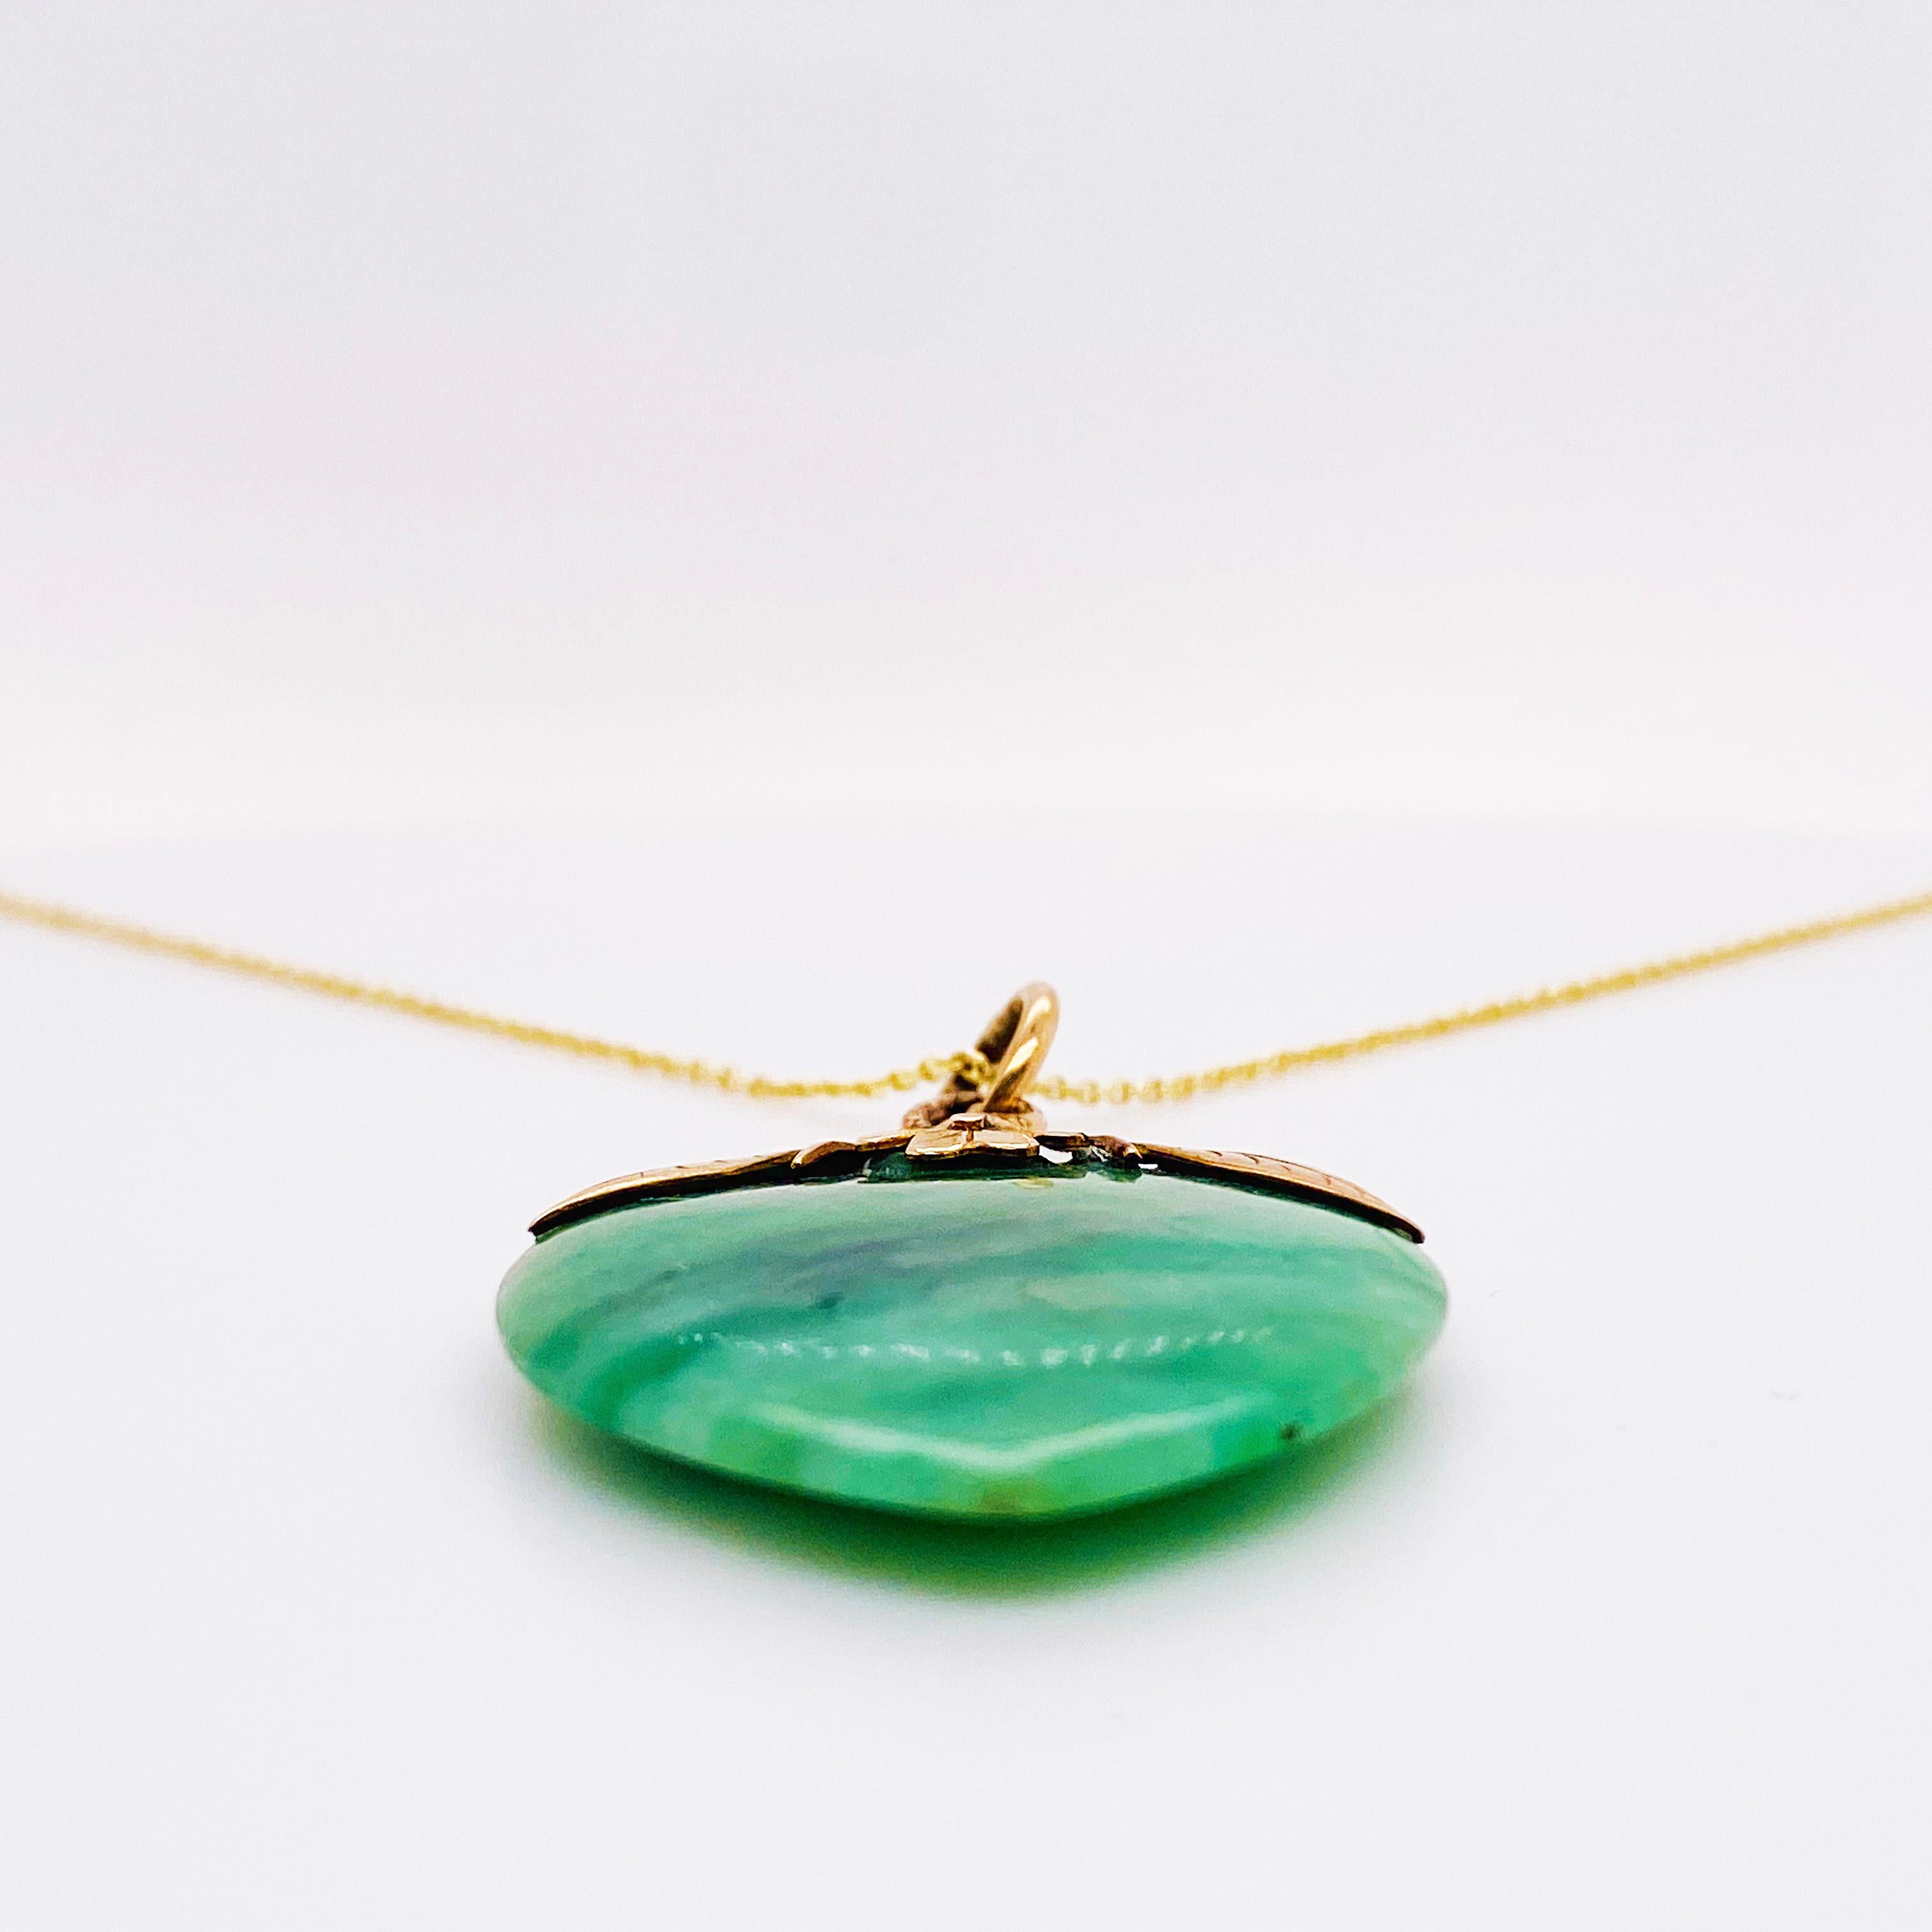 Victorian Jade Jadeite Antique Pendant Necklace with Leaf Design on the Top 14 Karat Gold